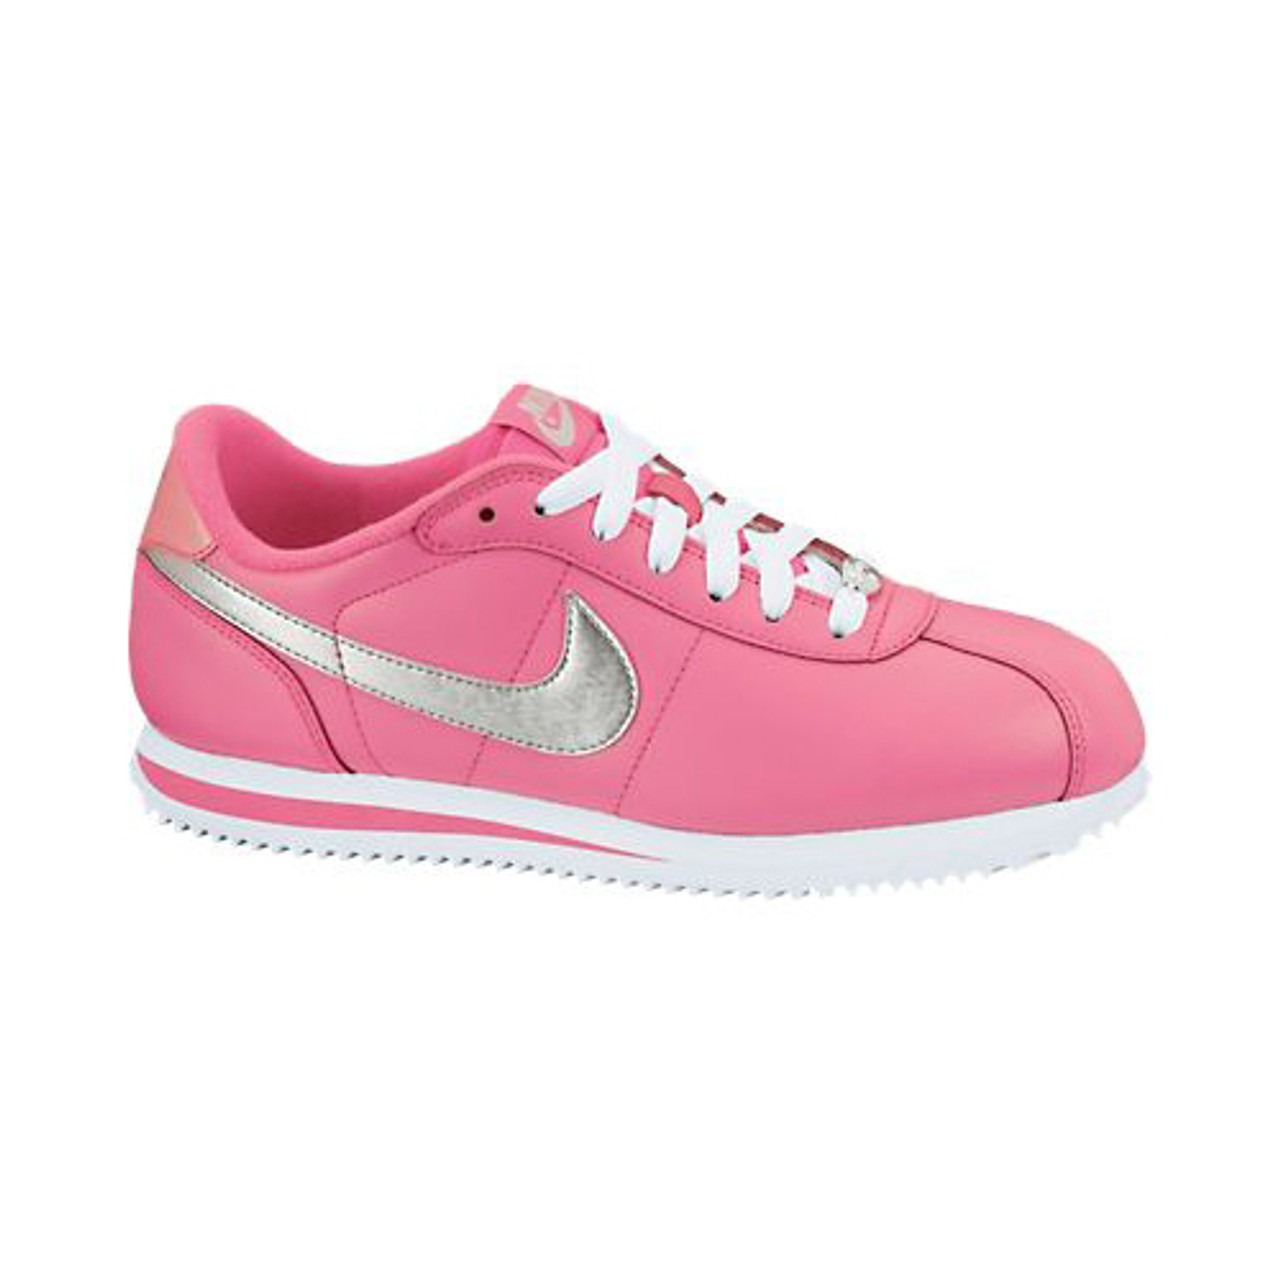 Nike Cortez Basic Leather Pink/White/Silver Ladies Walking Shoes